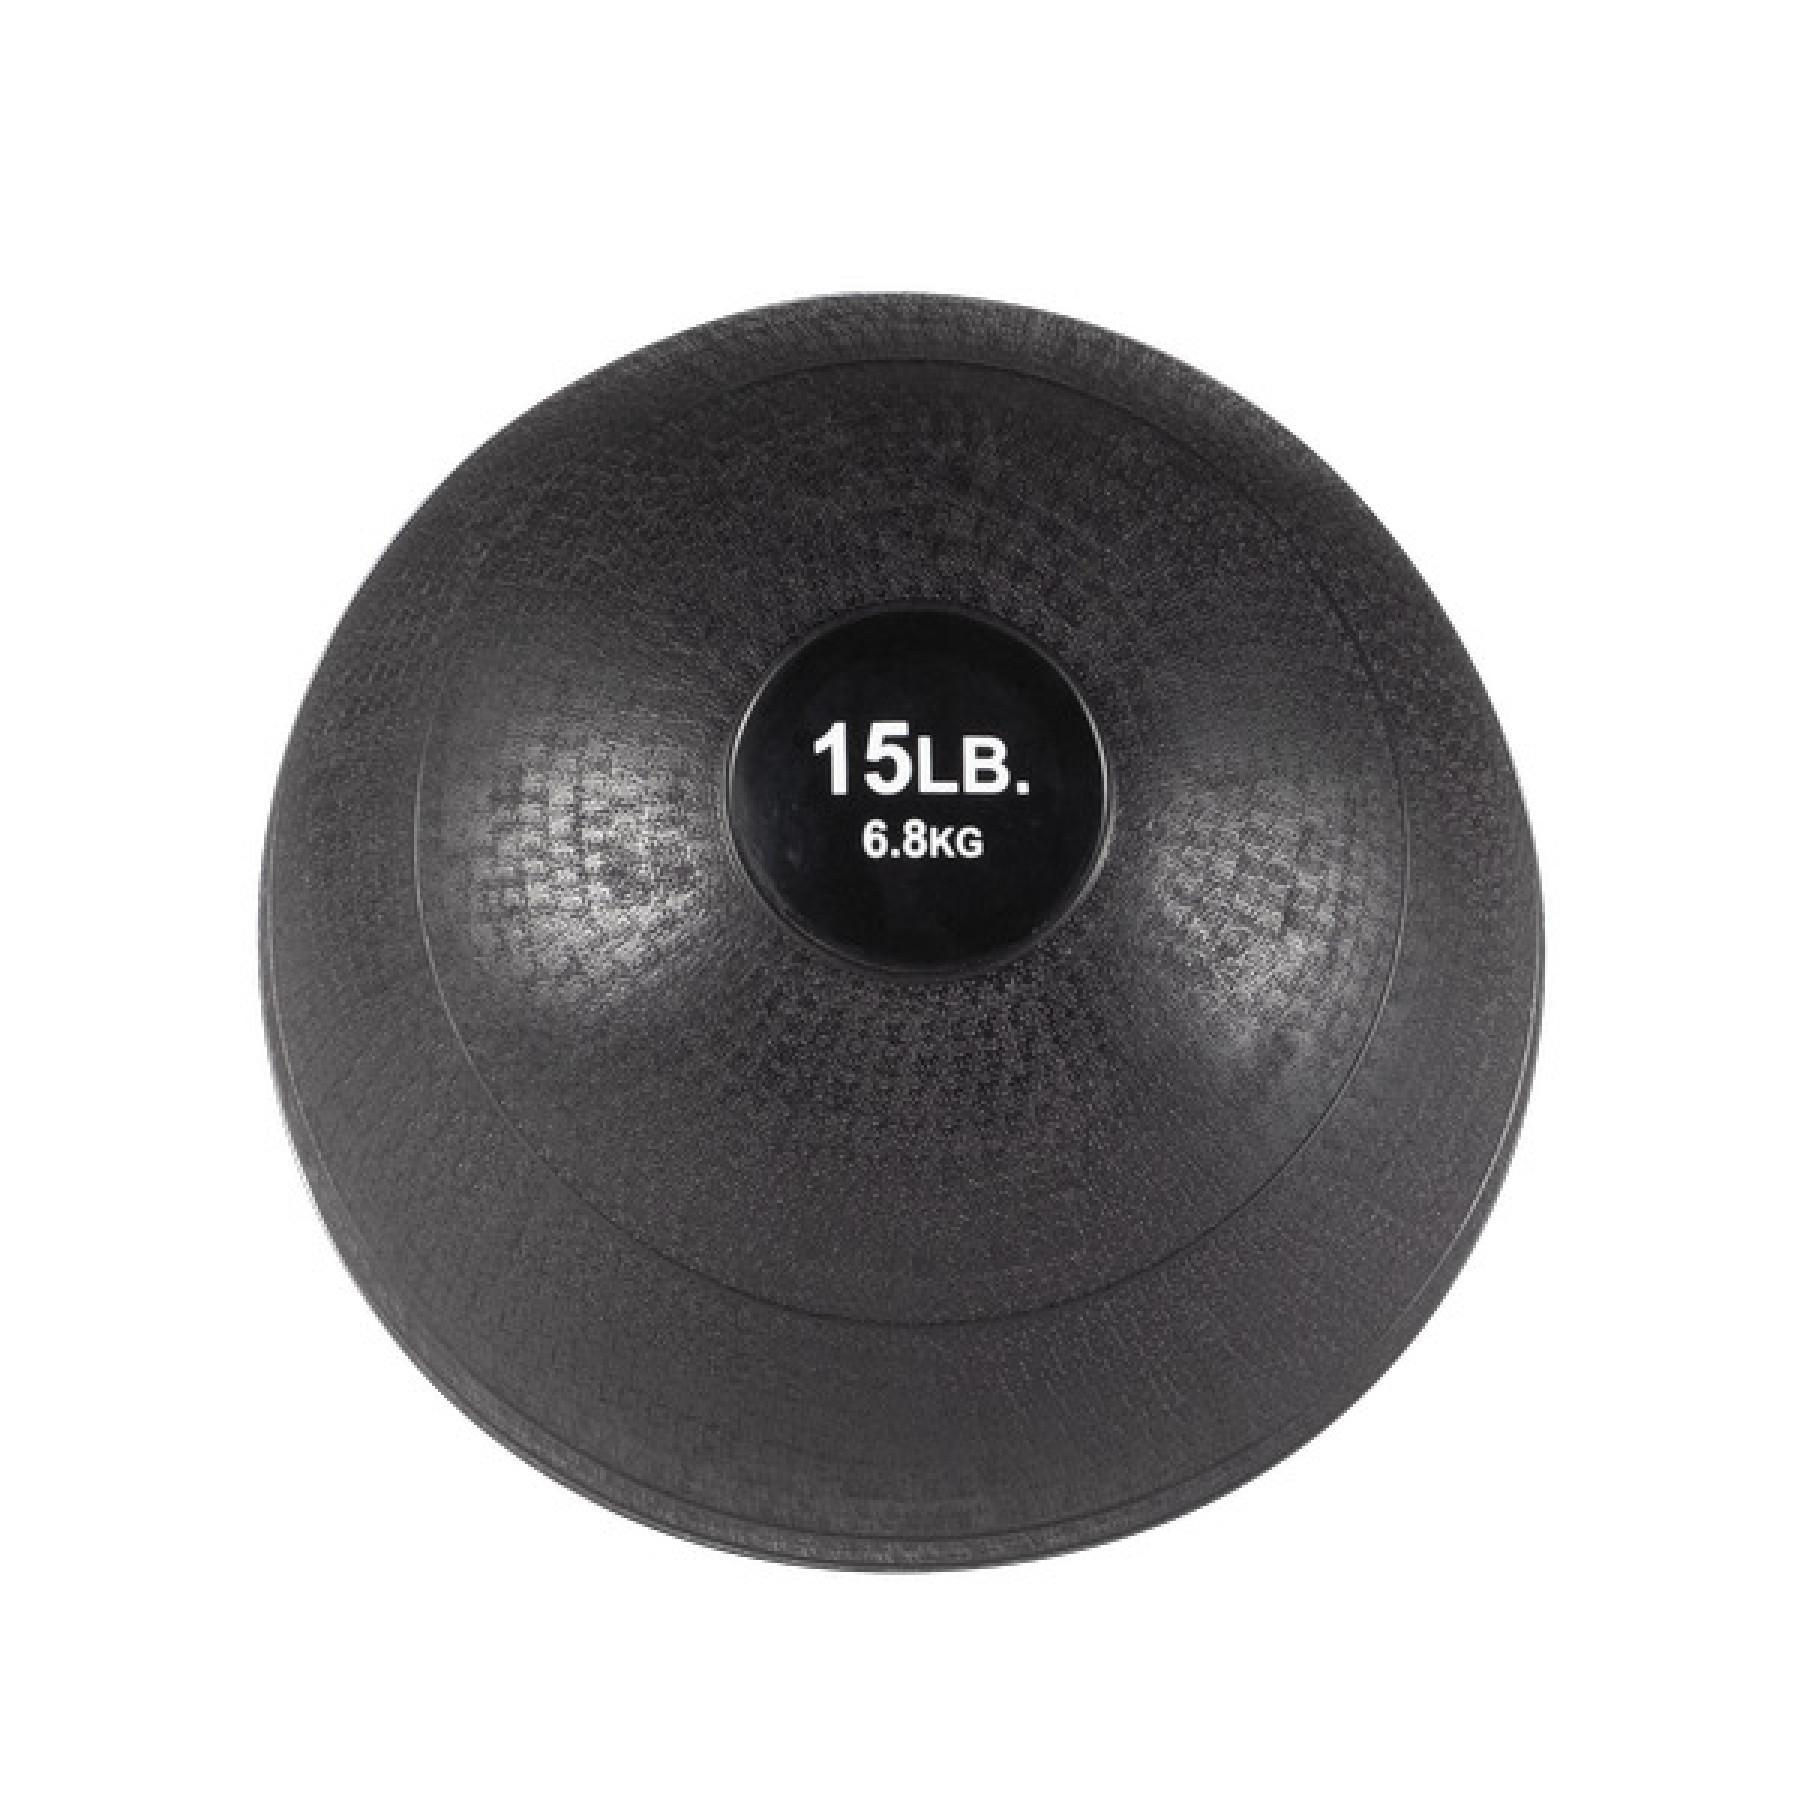 Esfera Slam 20 lb - 9,7 kg Body Solid